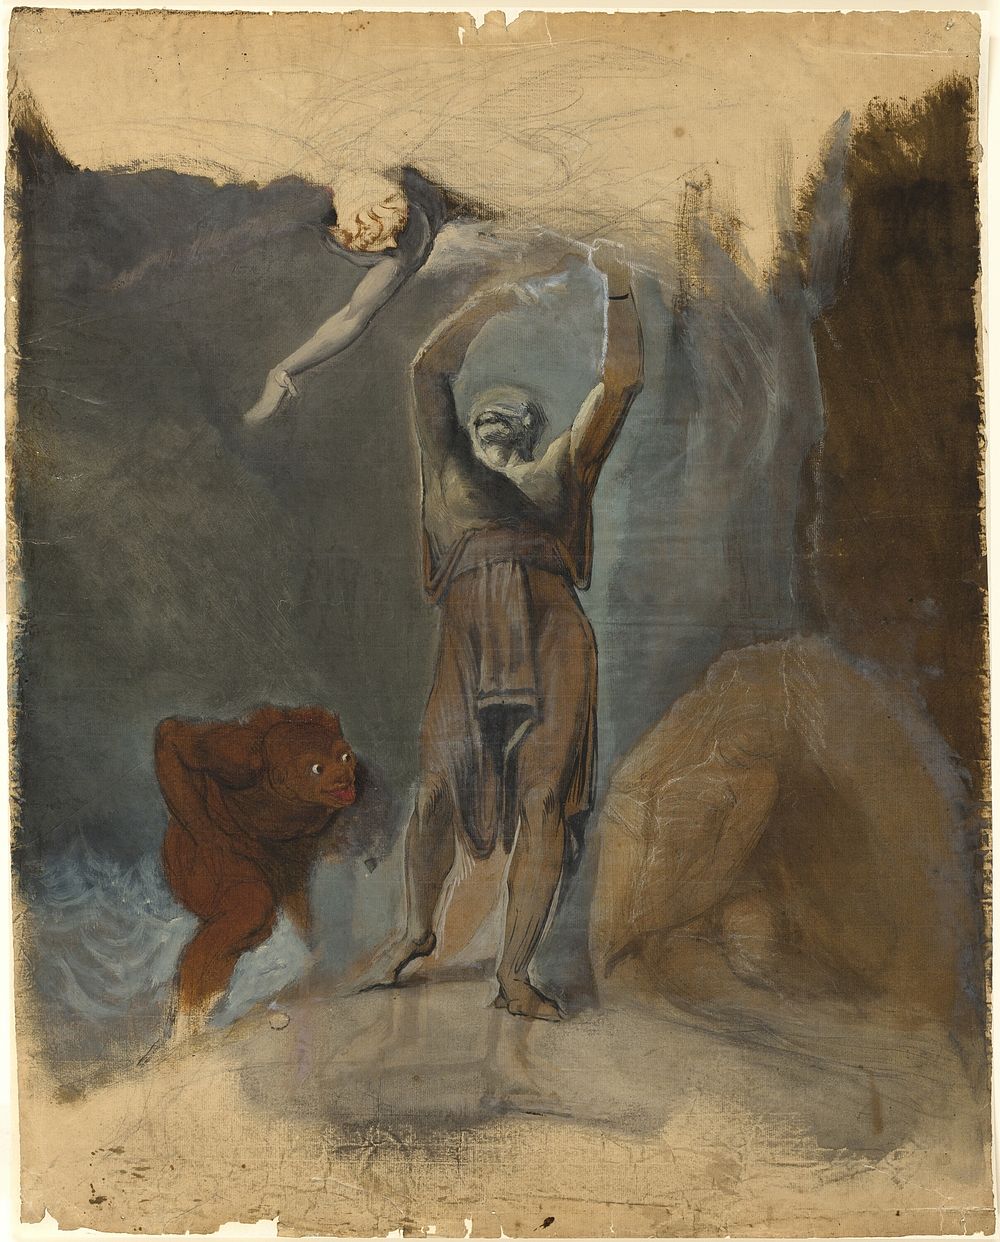 Prospero, Miranda, Caliban and Ariel by Henry Fuseli